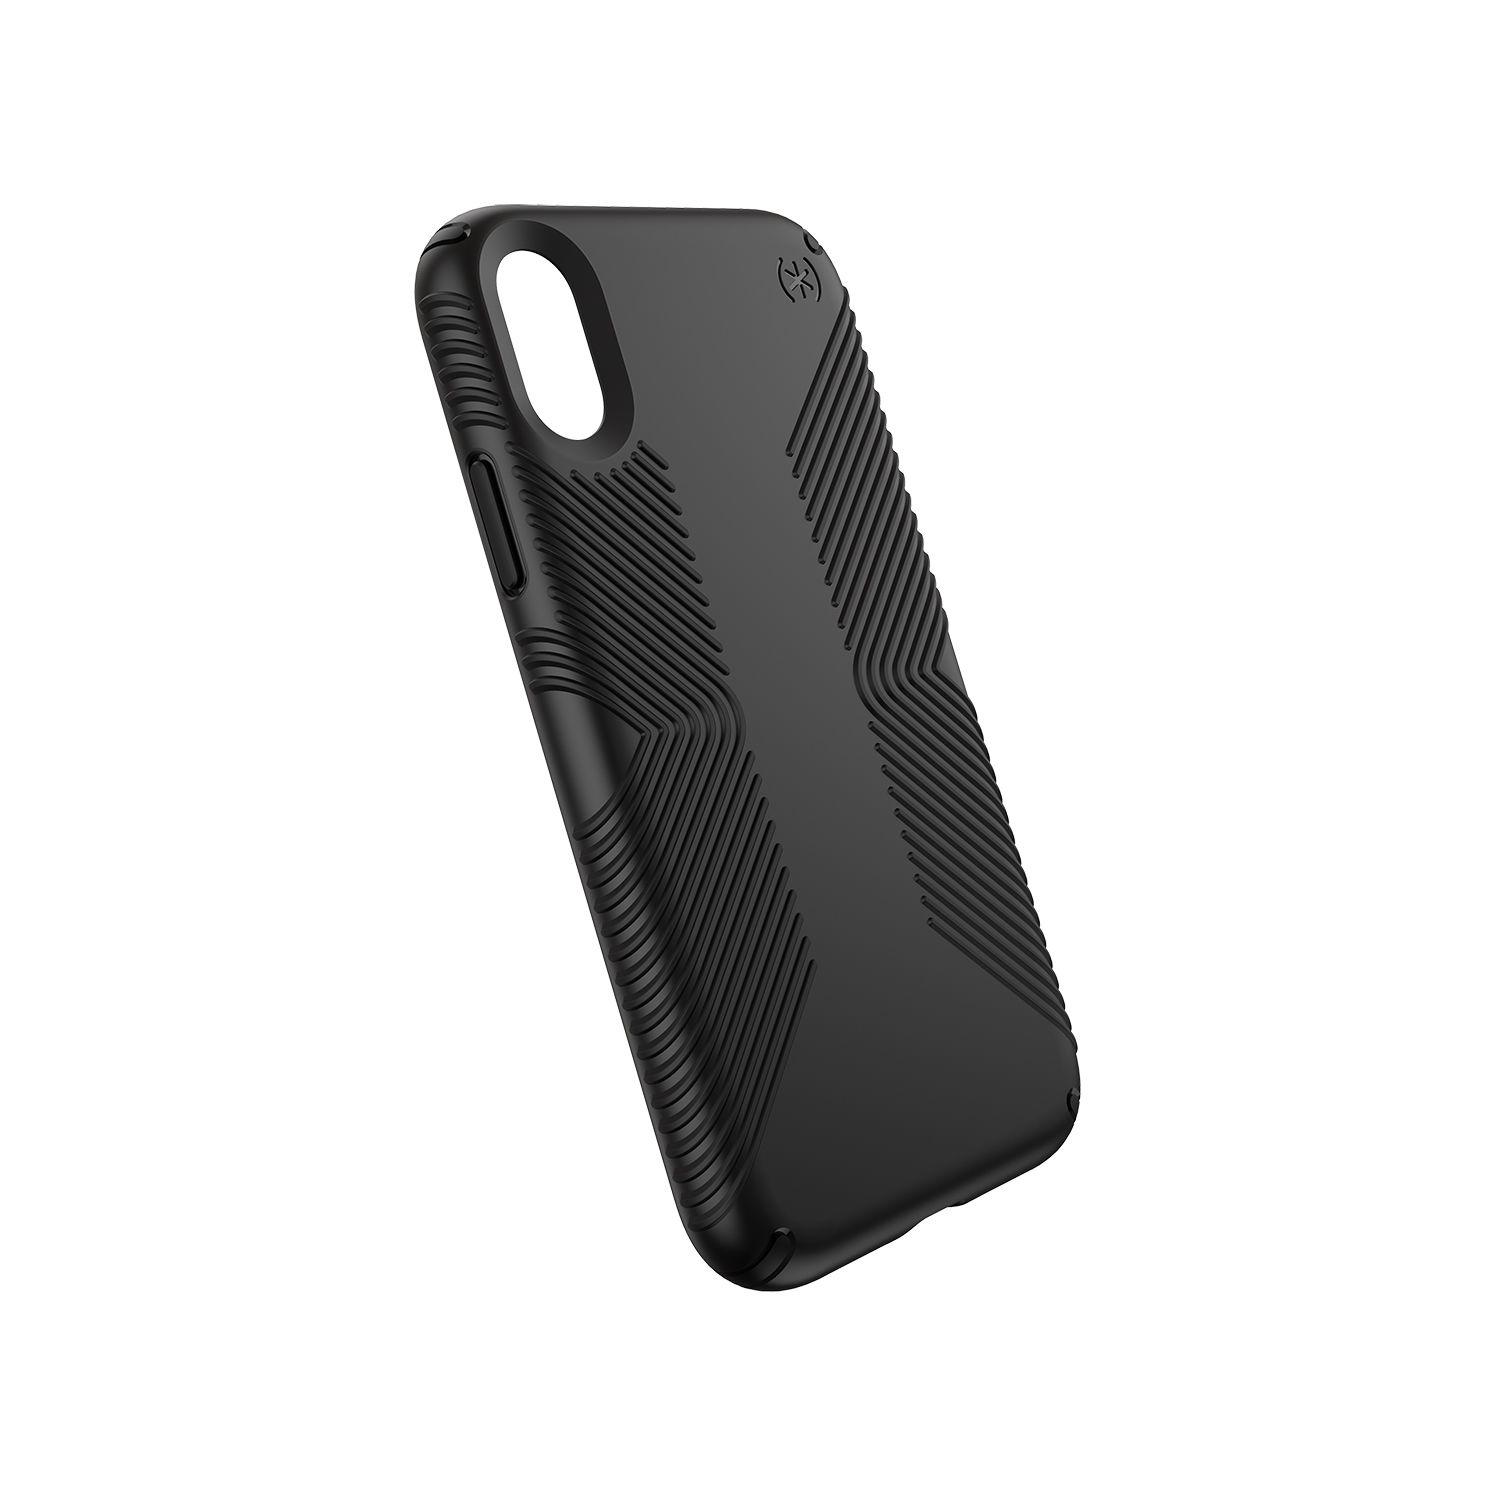 Speck Presidio Grip Case Black/Black for iPhone XR